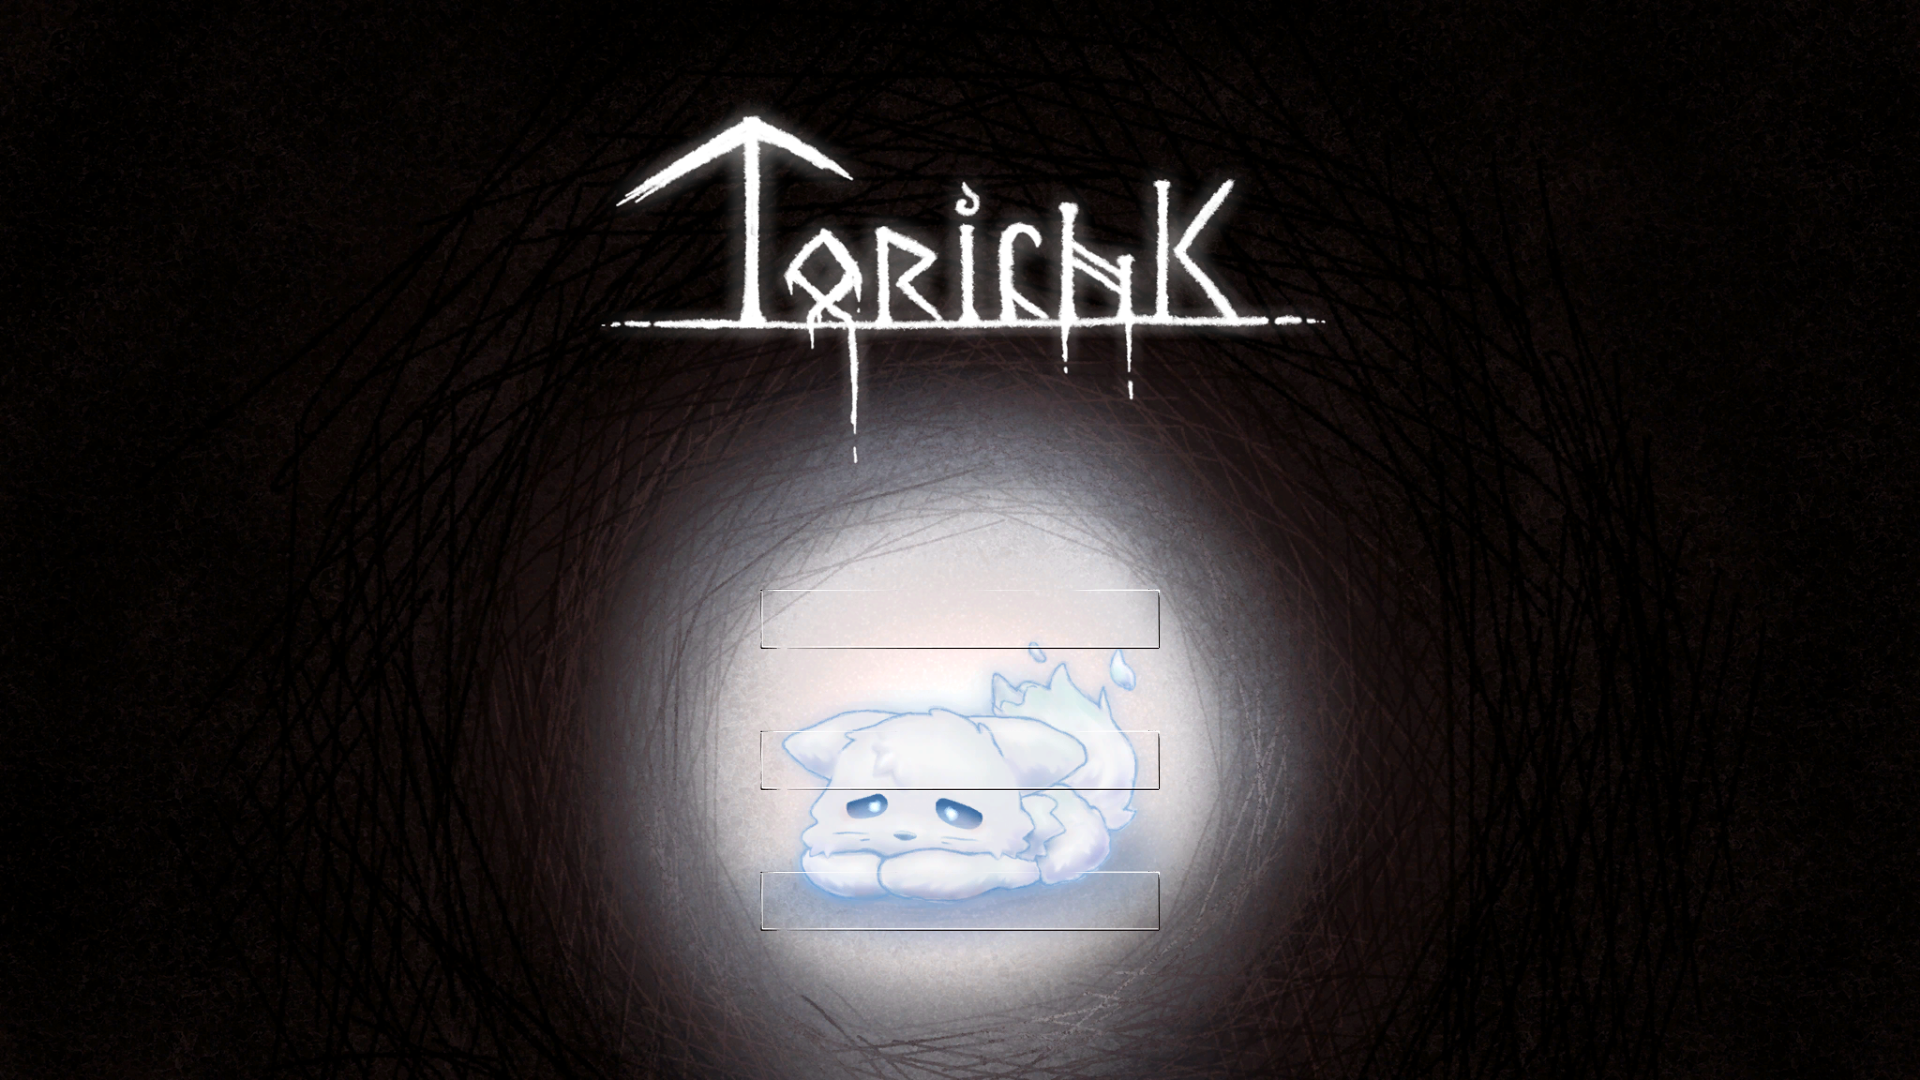 Torichk